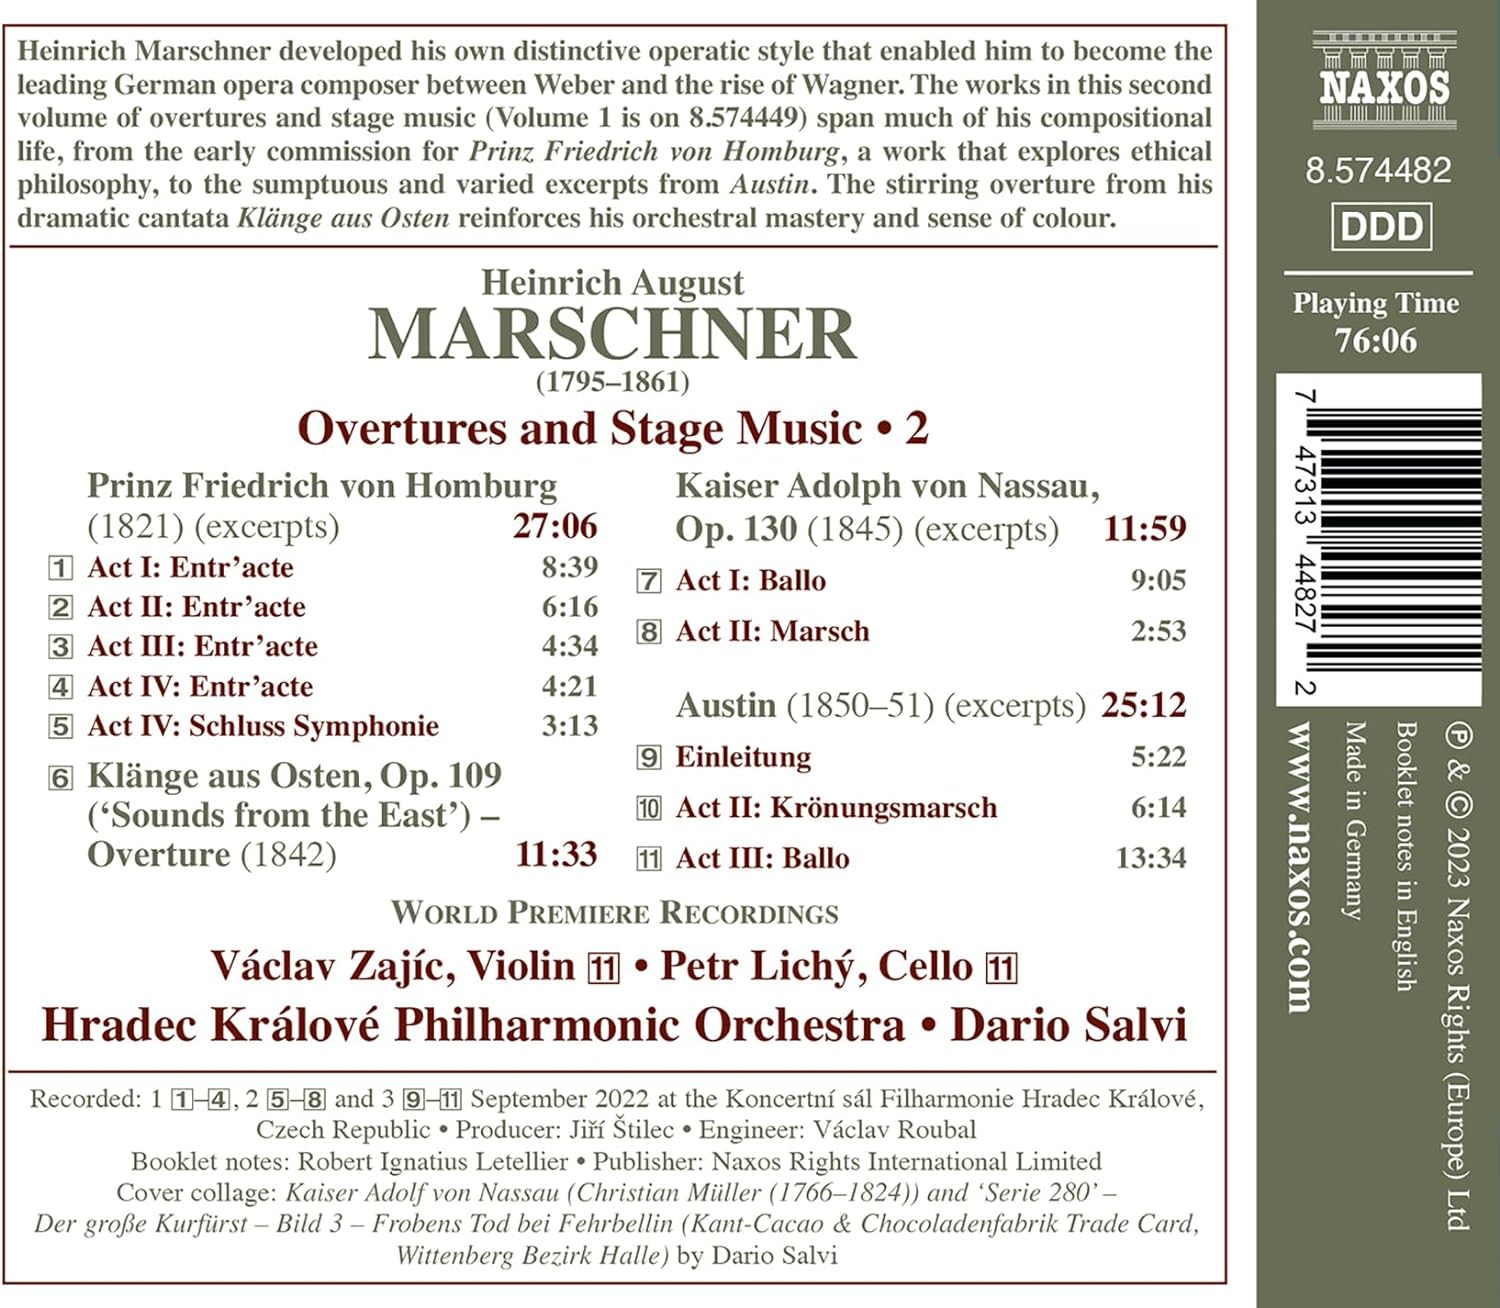 Dario Salvi 마르슈너: 서곡과 무대 음악 작품 2집 (Marschner: Overtures & Stage Music, Vol. 2)